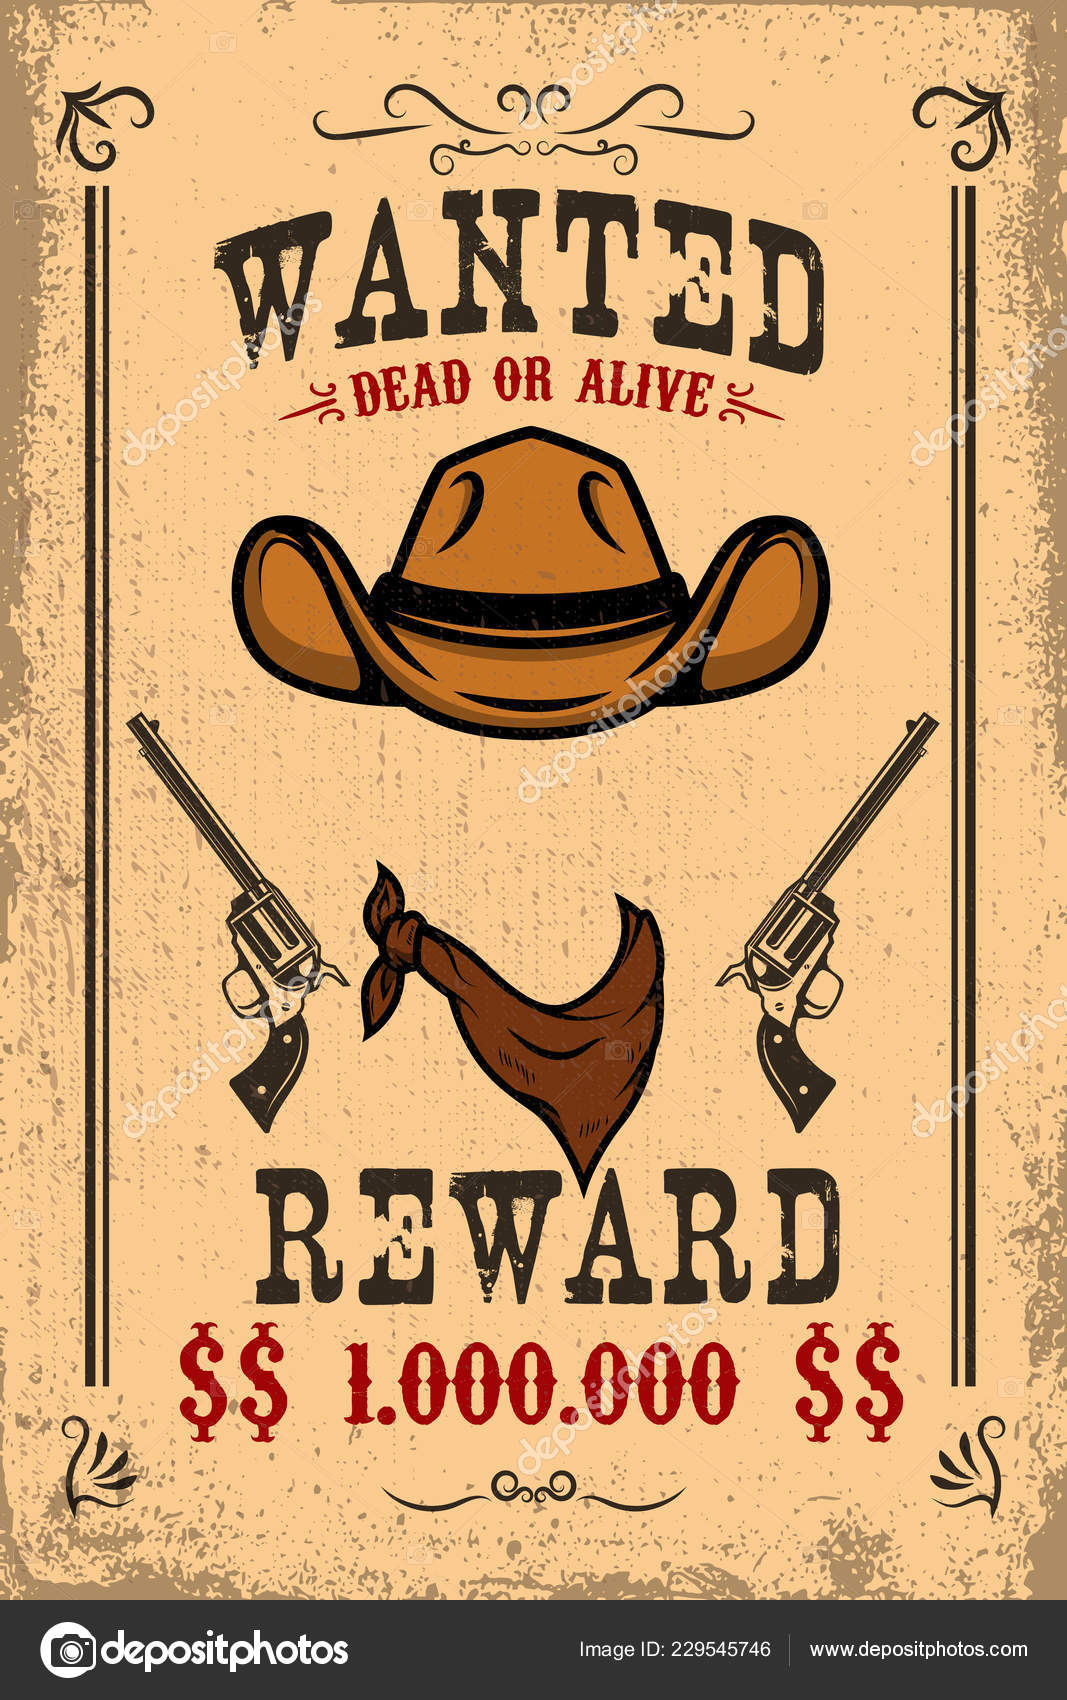 reward poster template